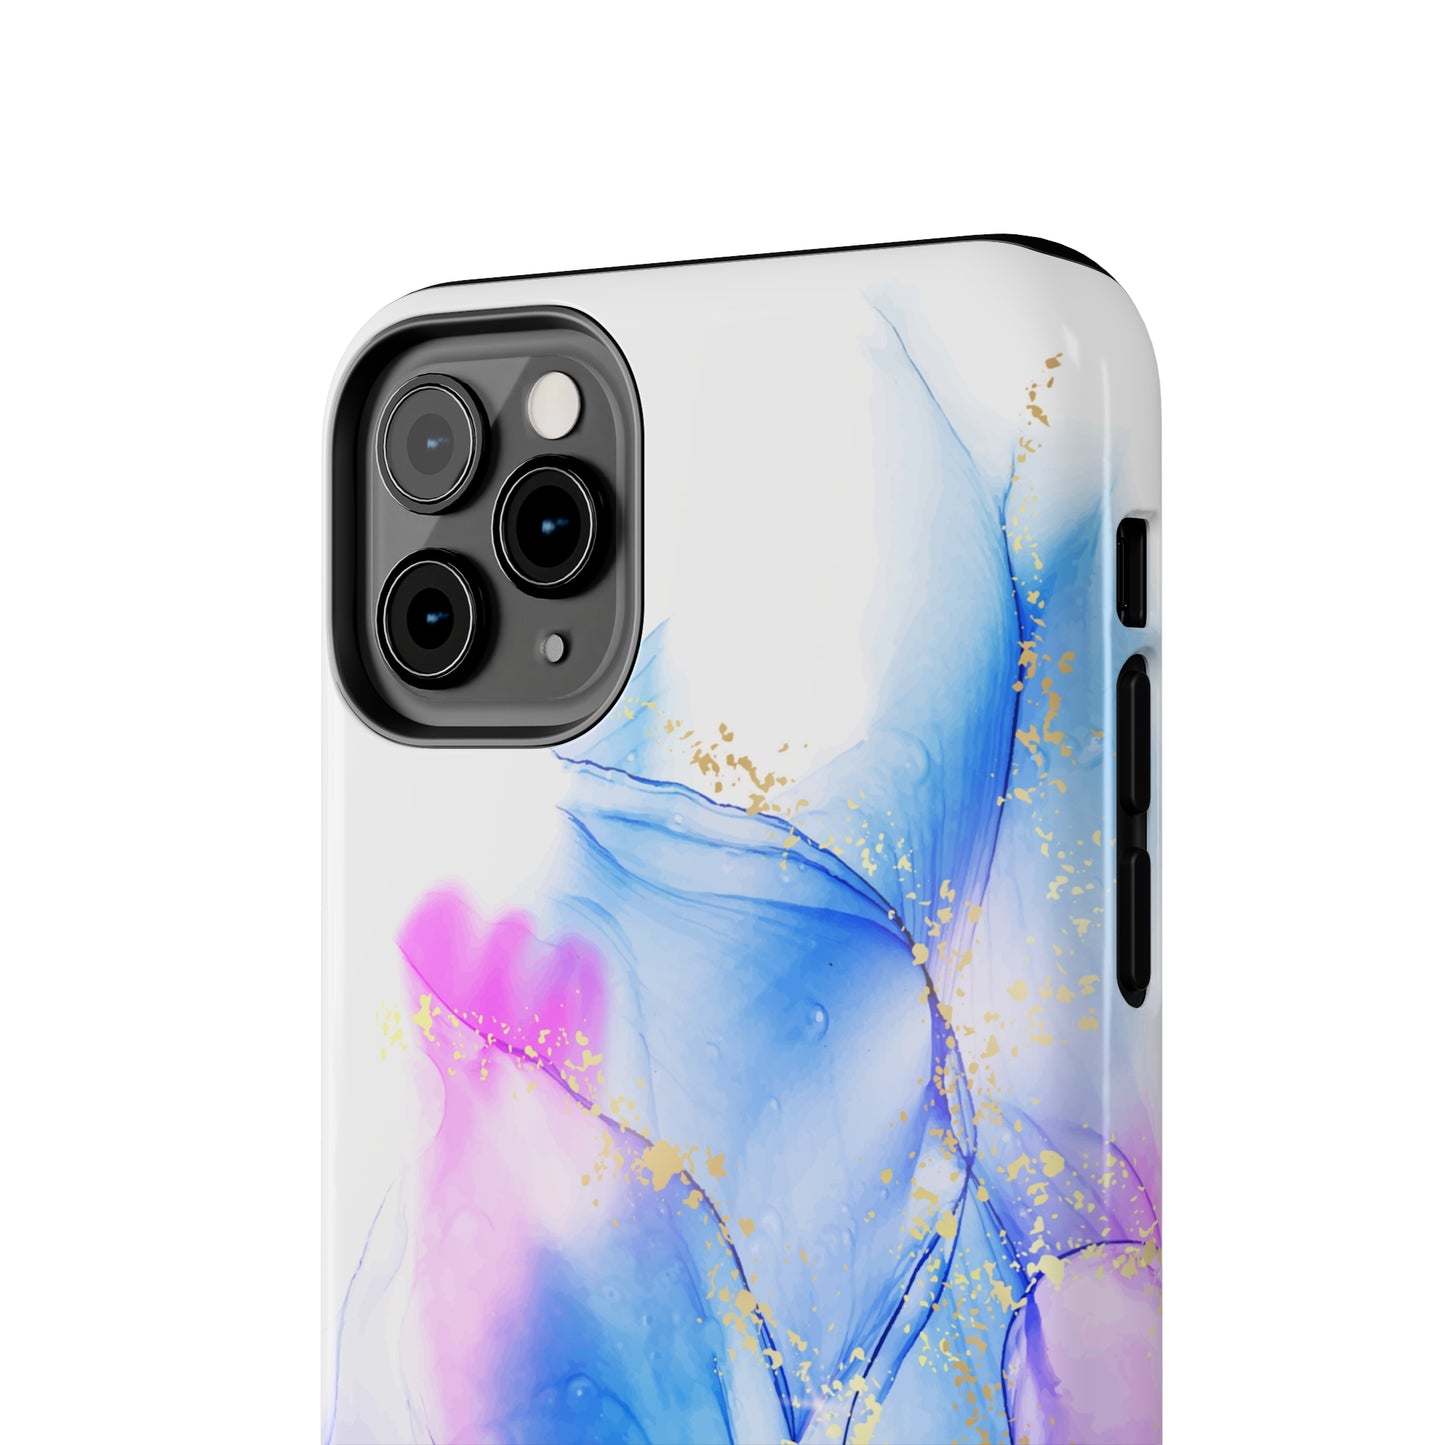 Whimsical Heart Nebula - iPhone Case